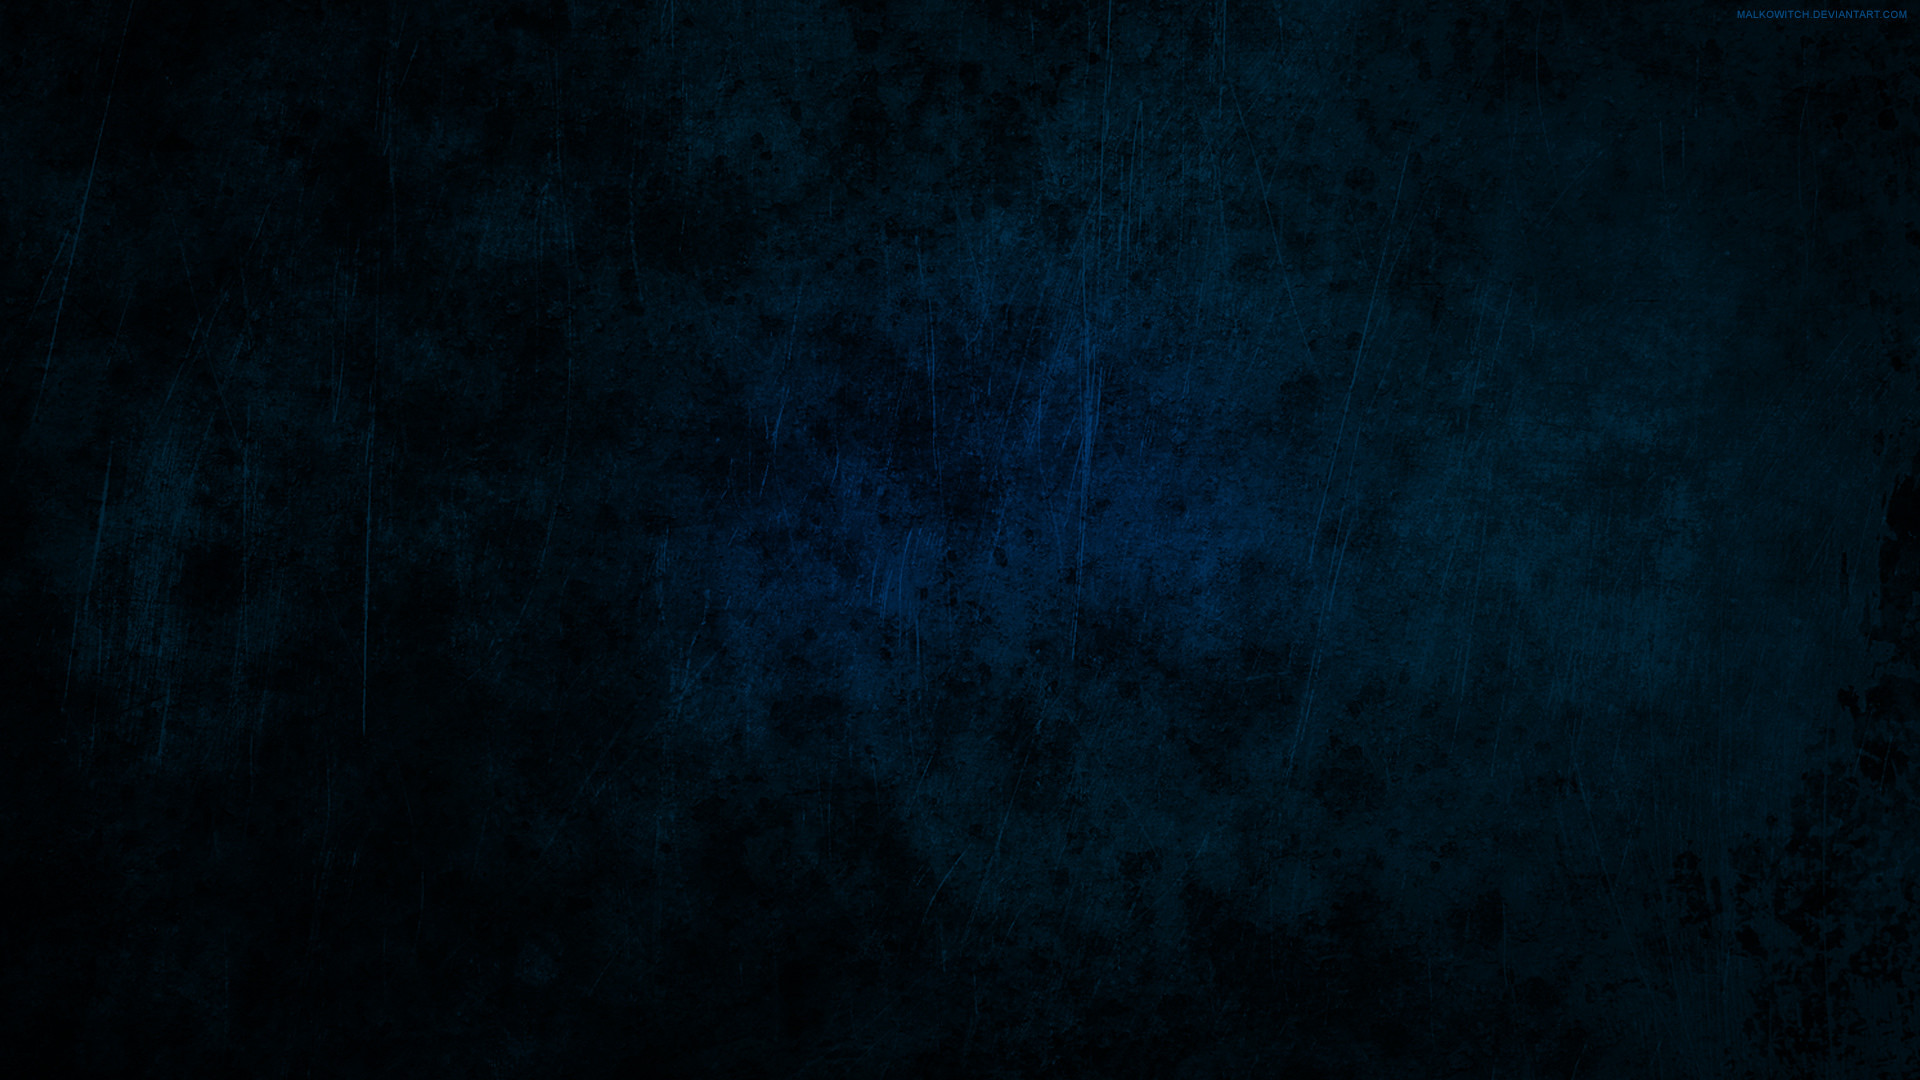 Dark Blue Grunge Background Layout Design Stock Image  Image of bordeau  material 130619397